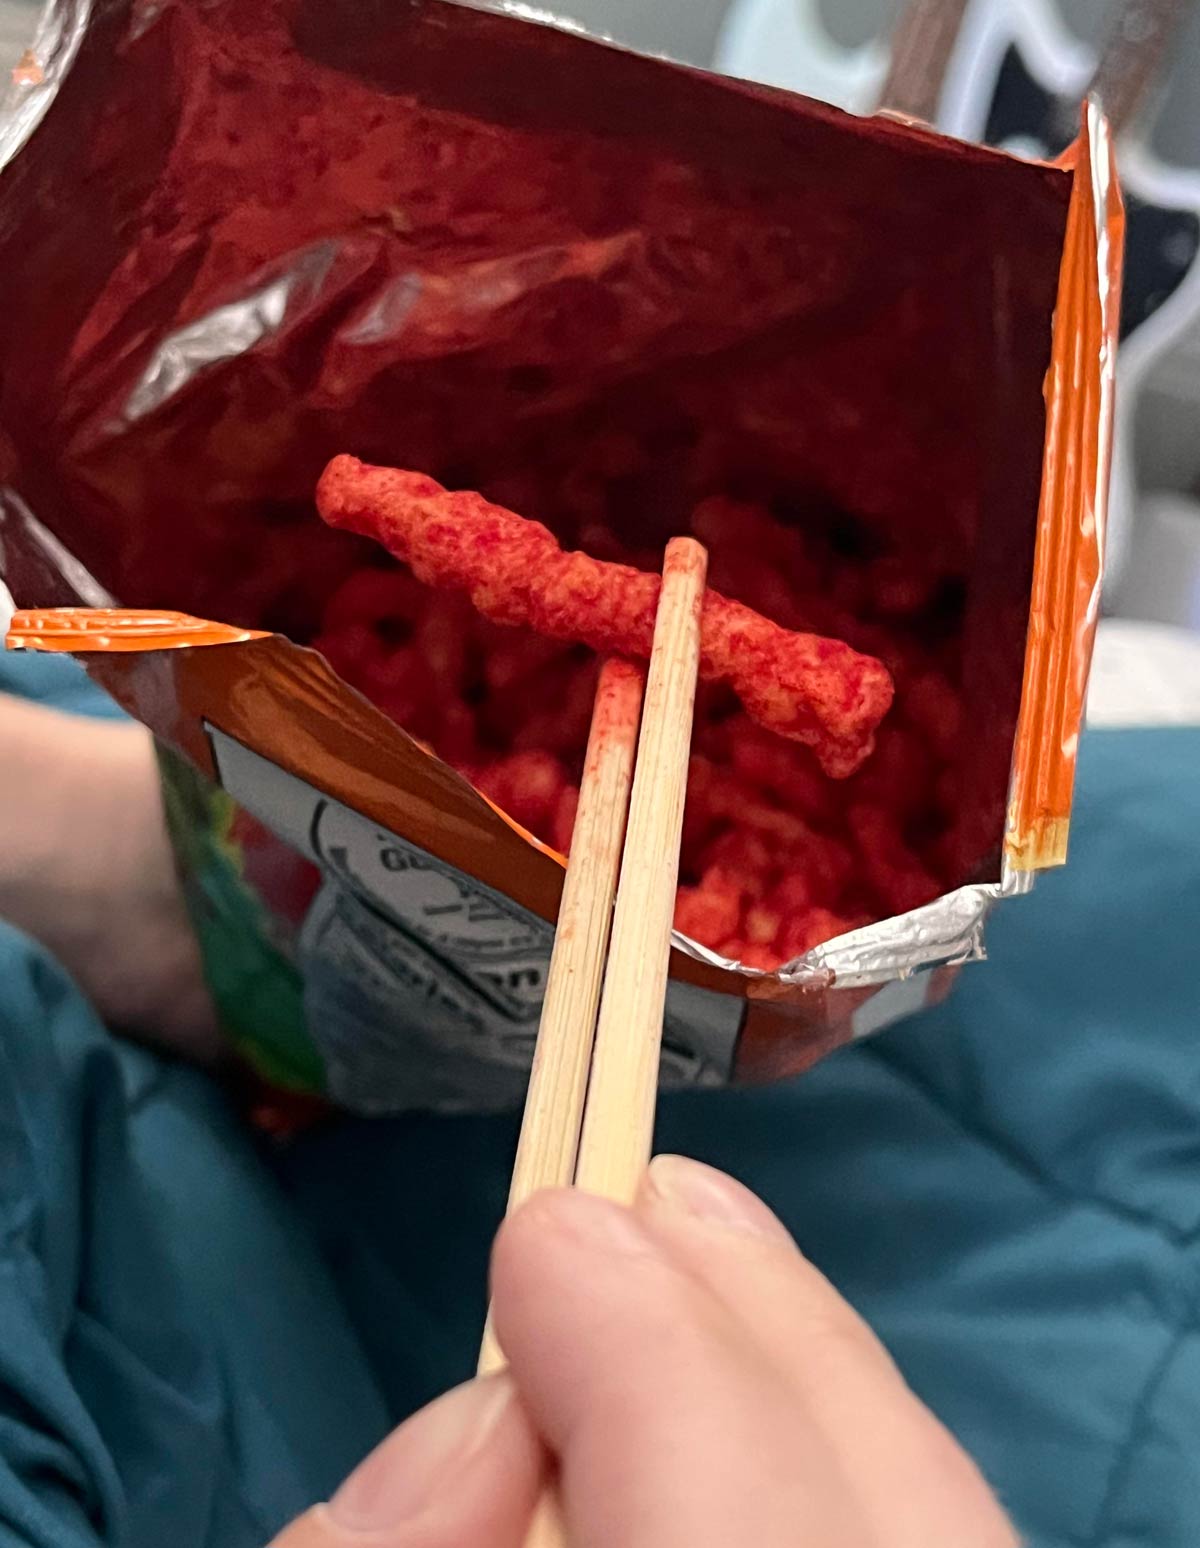 My girlfriend uses chopsticks to eat her Hot Cheetos